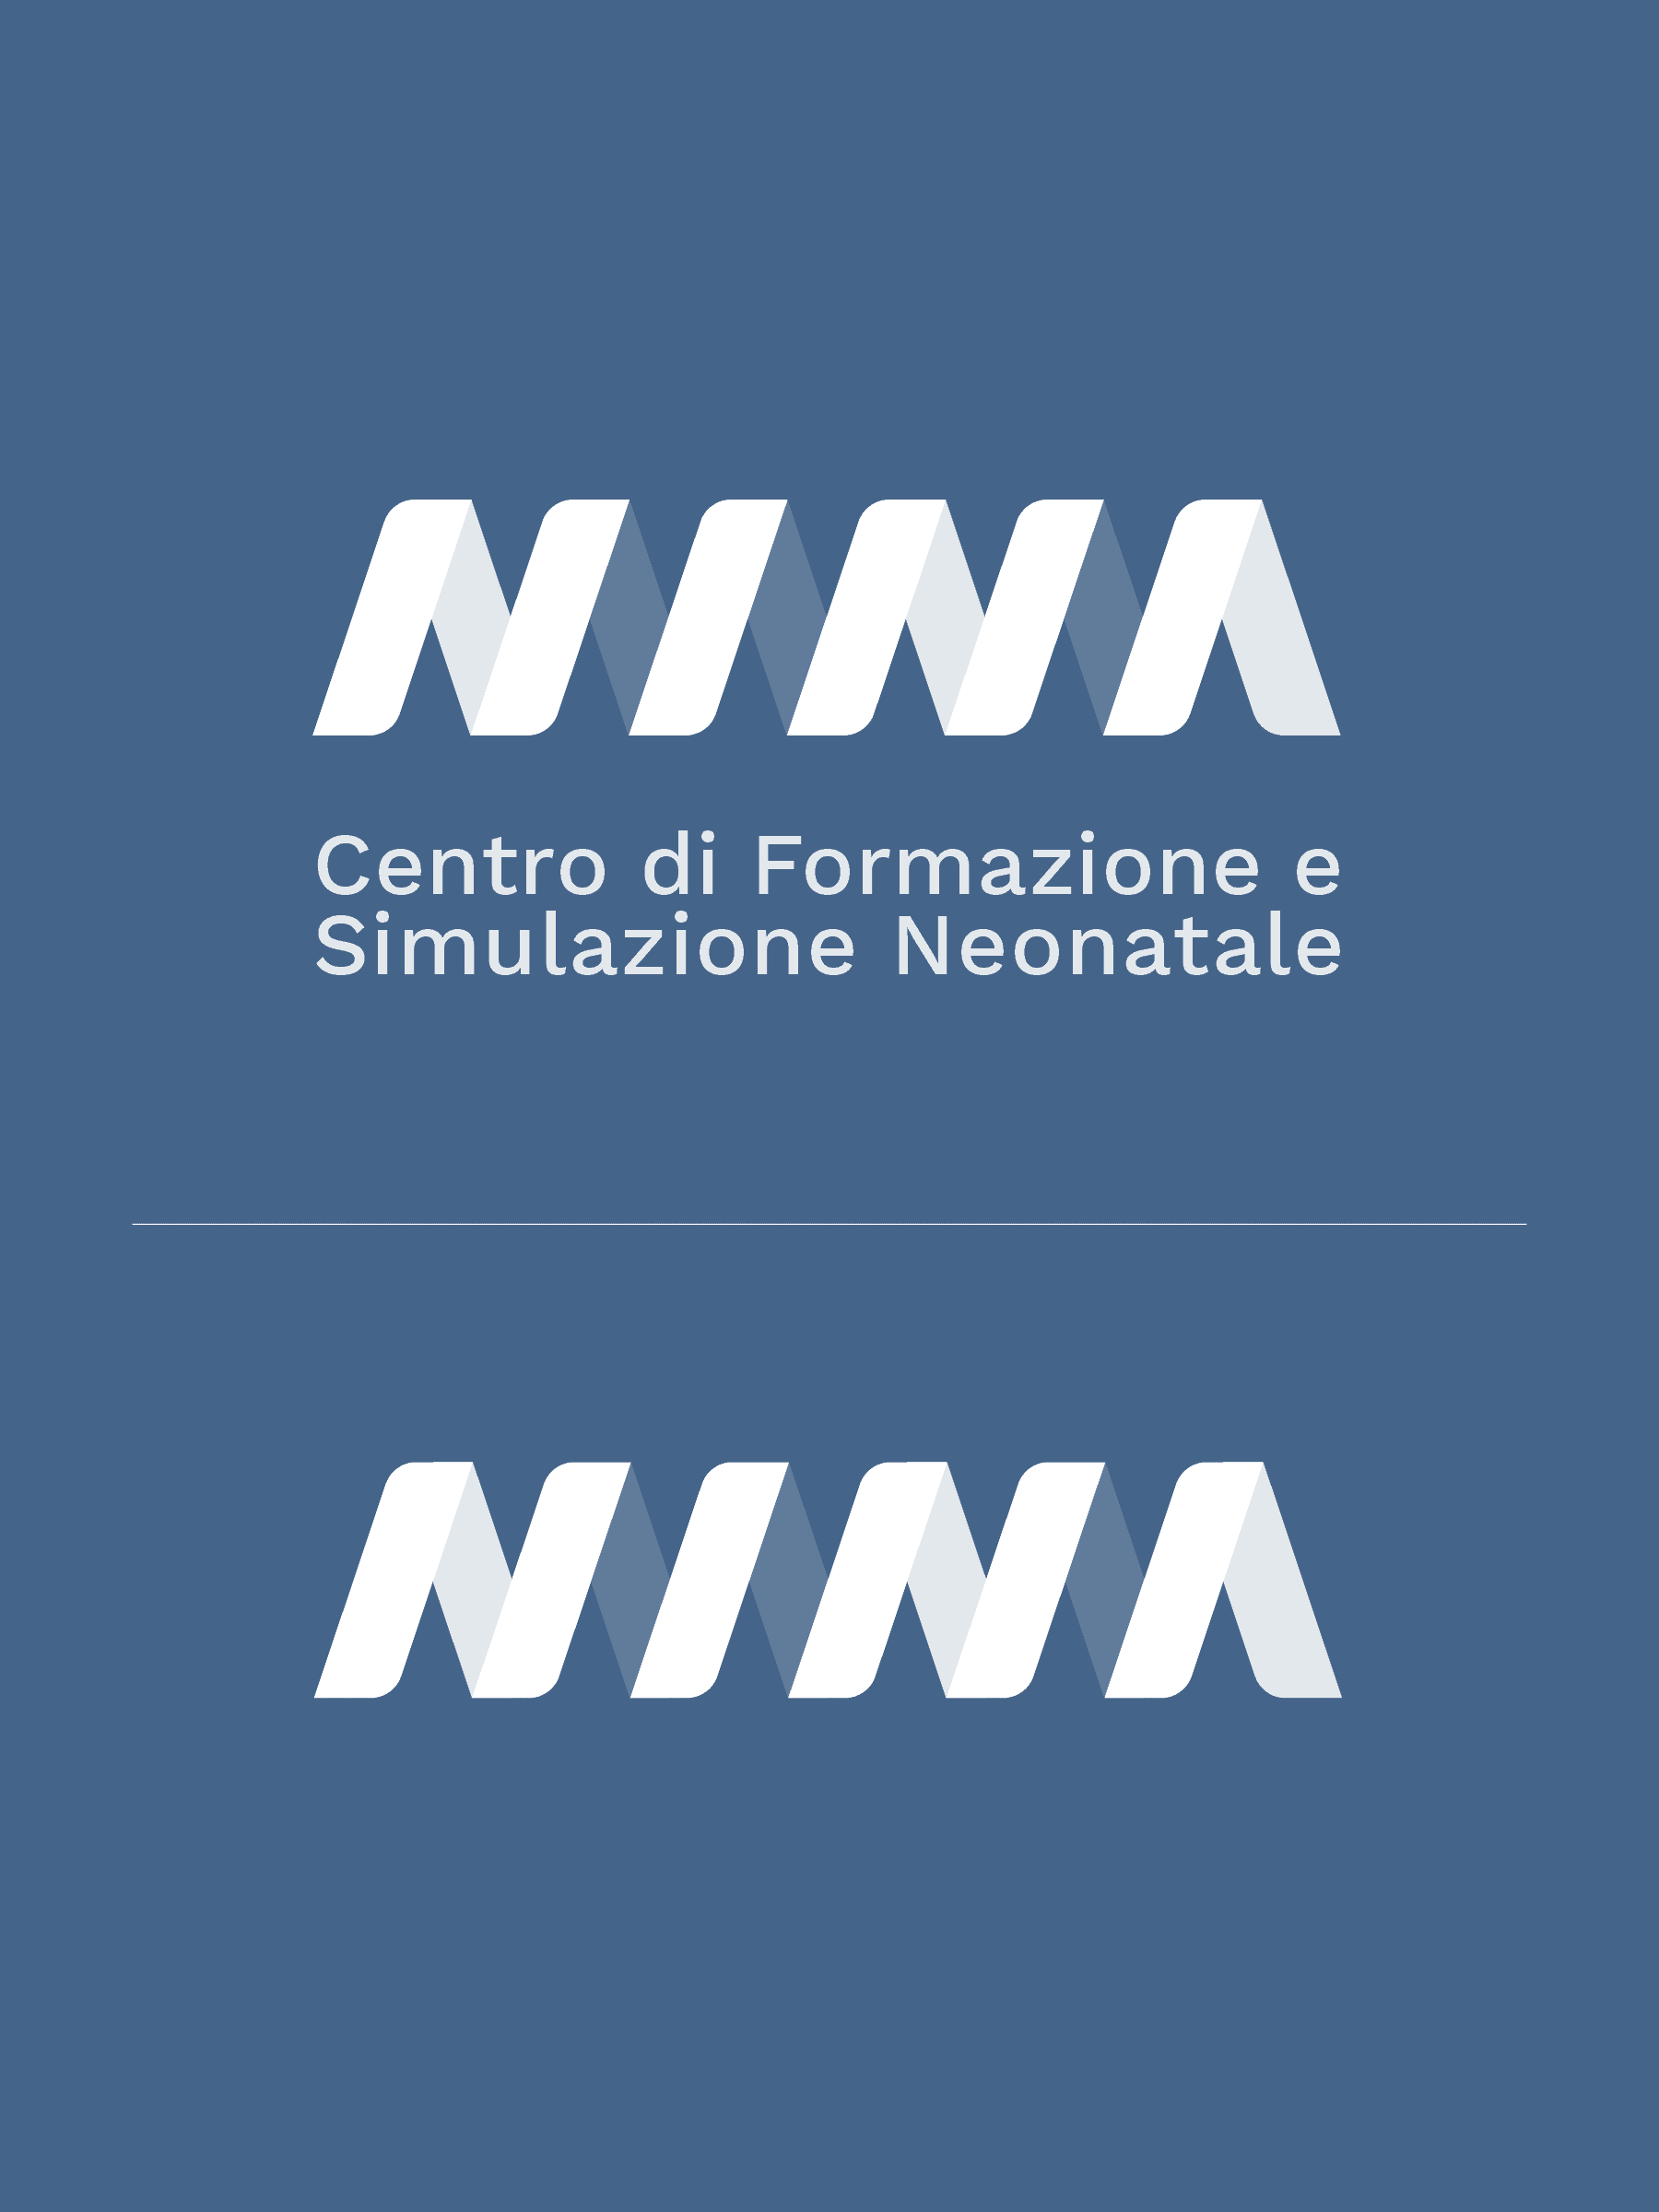 NINA logo monochrome white